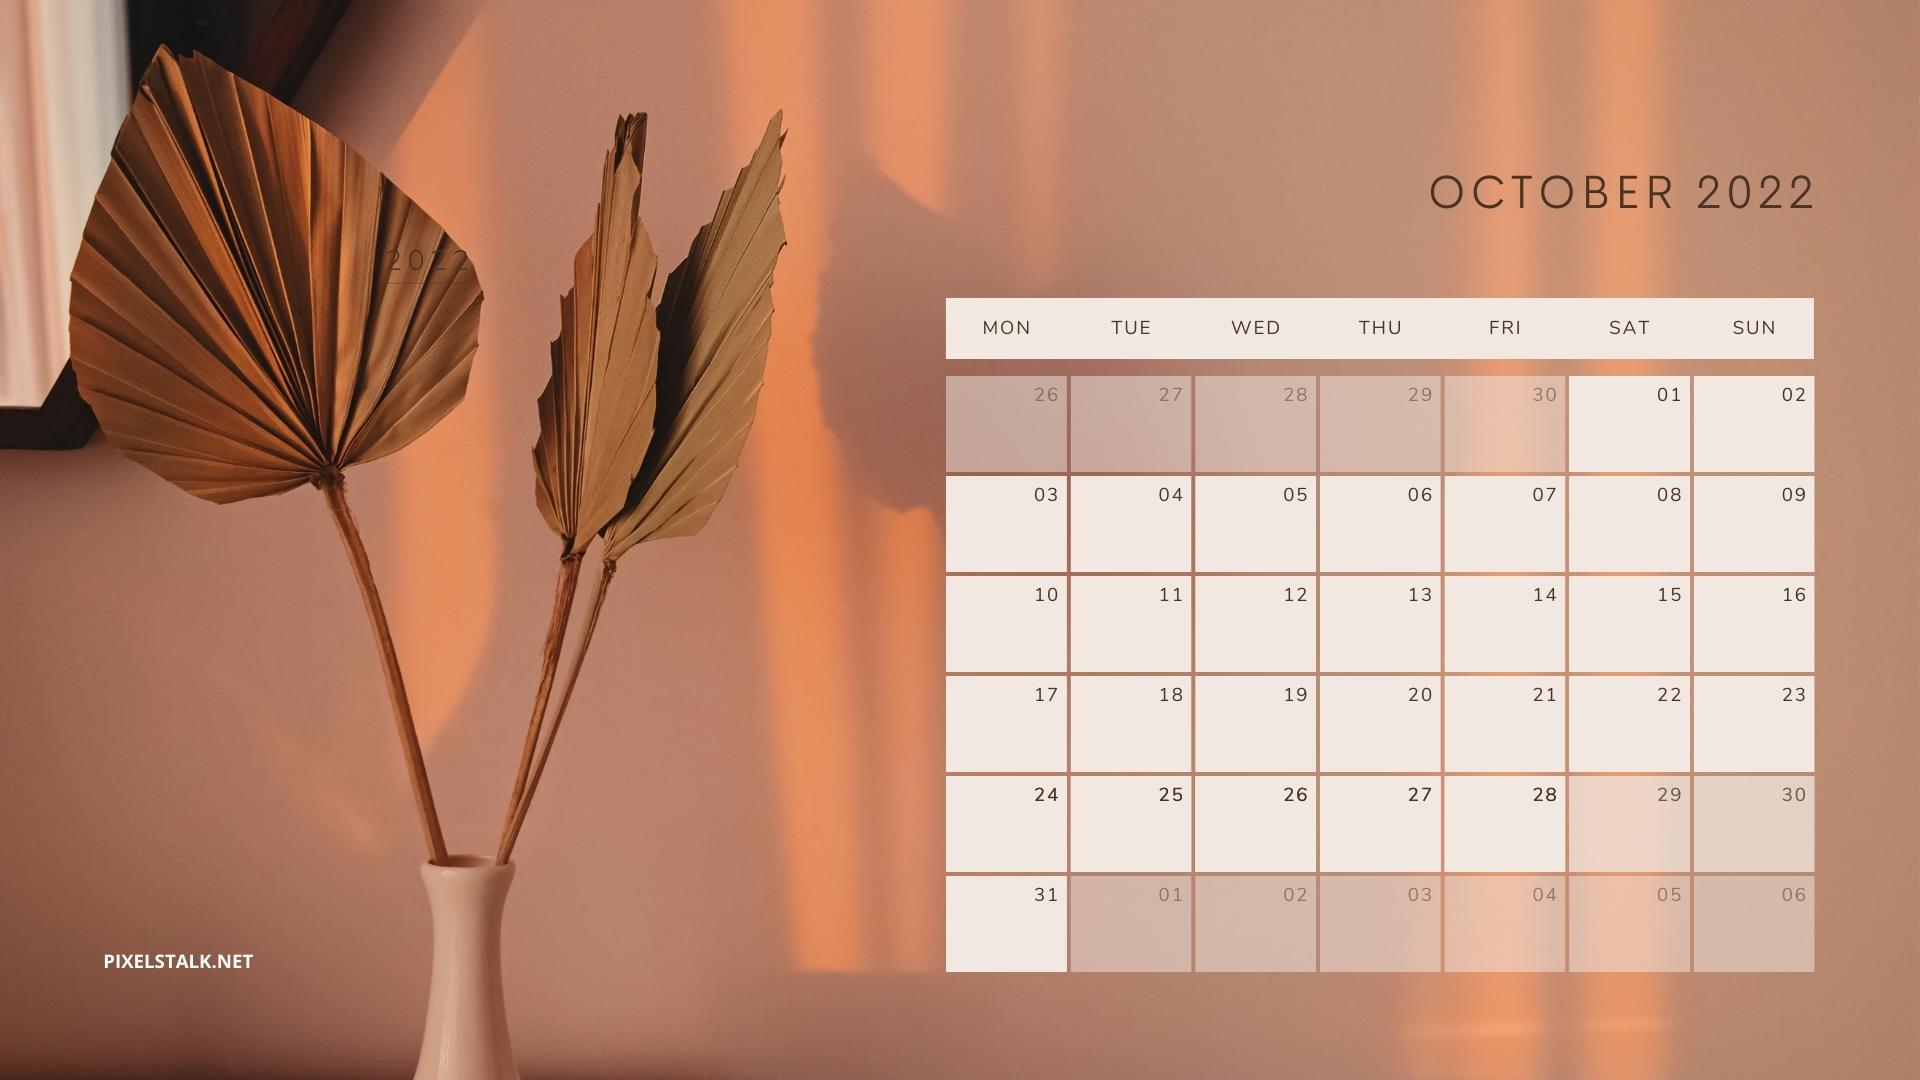 October 2017 calendar wallpaper for desktop background